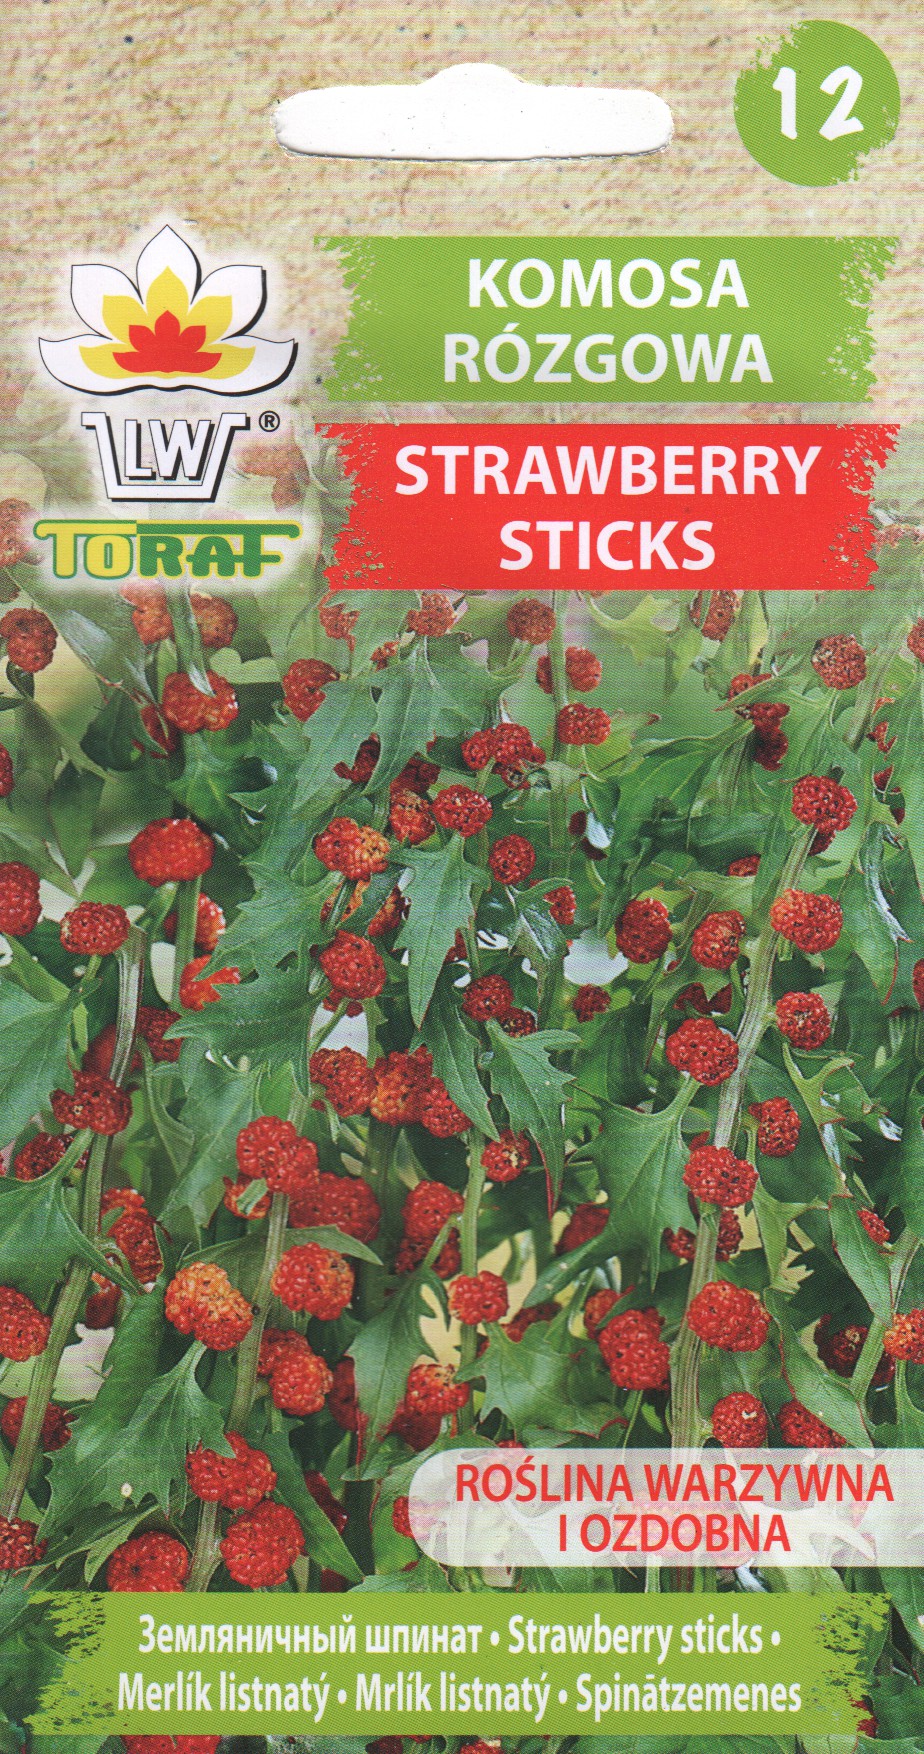 Ere hanemalts Strawberry Sticks